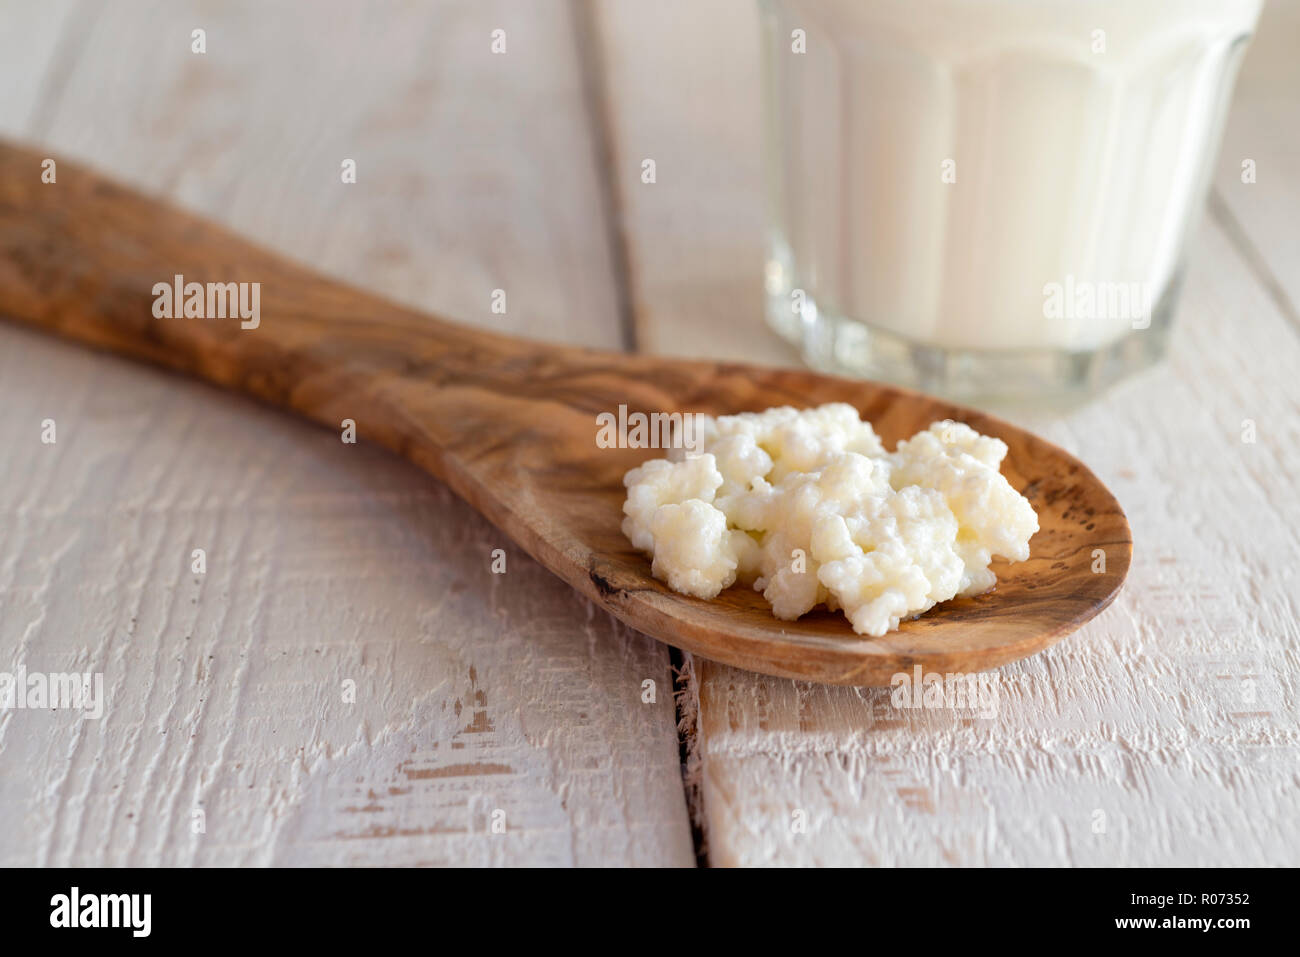 Close up of milk kefir grains, used to make a fermented milk kefir drink. Stock Photo